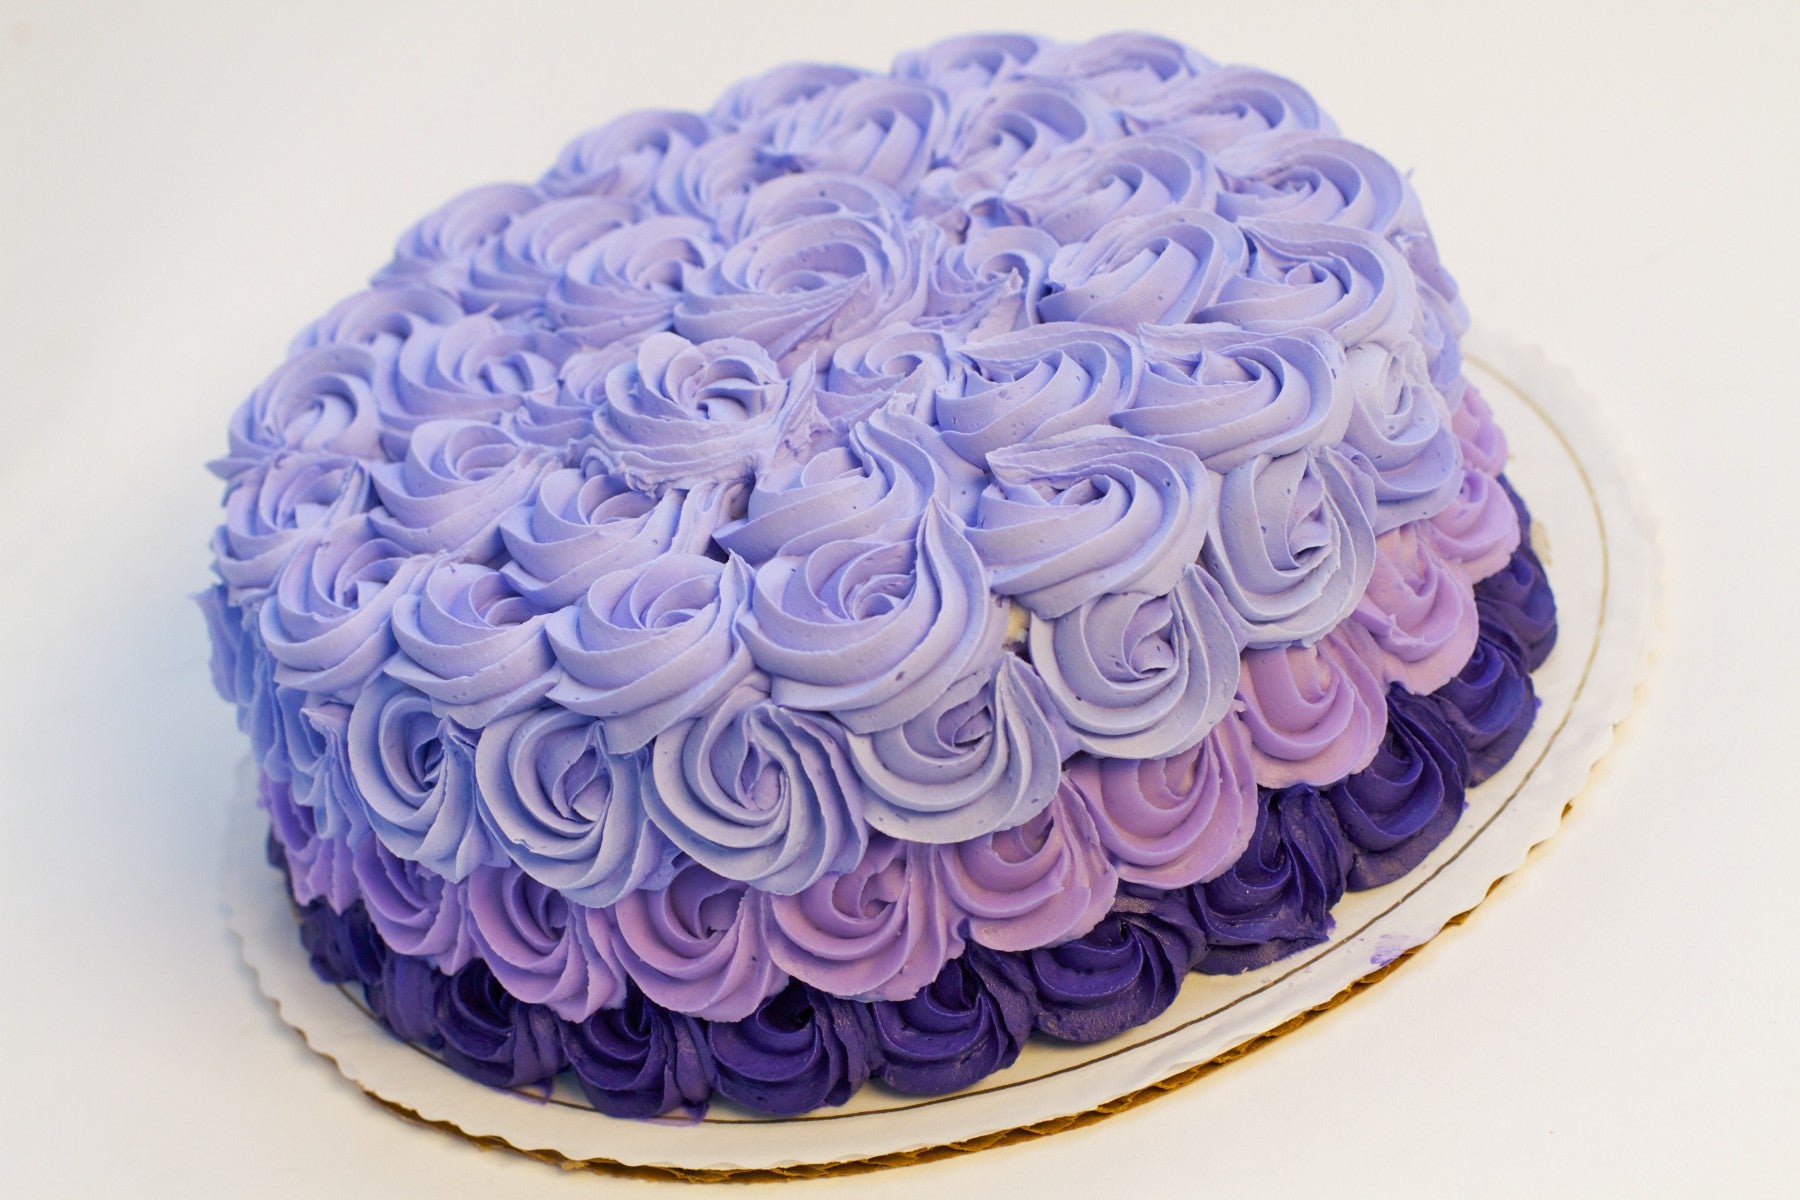 Premium Photo | Delicious decorated ombre cake